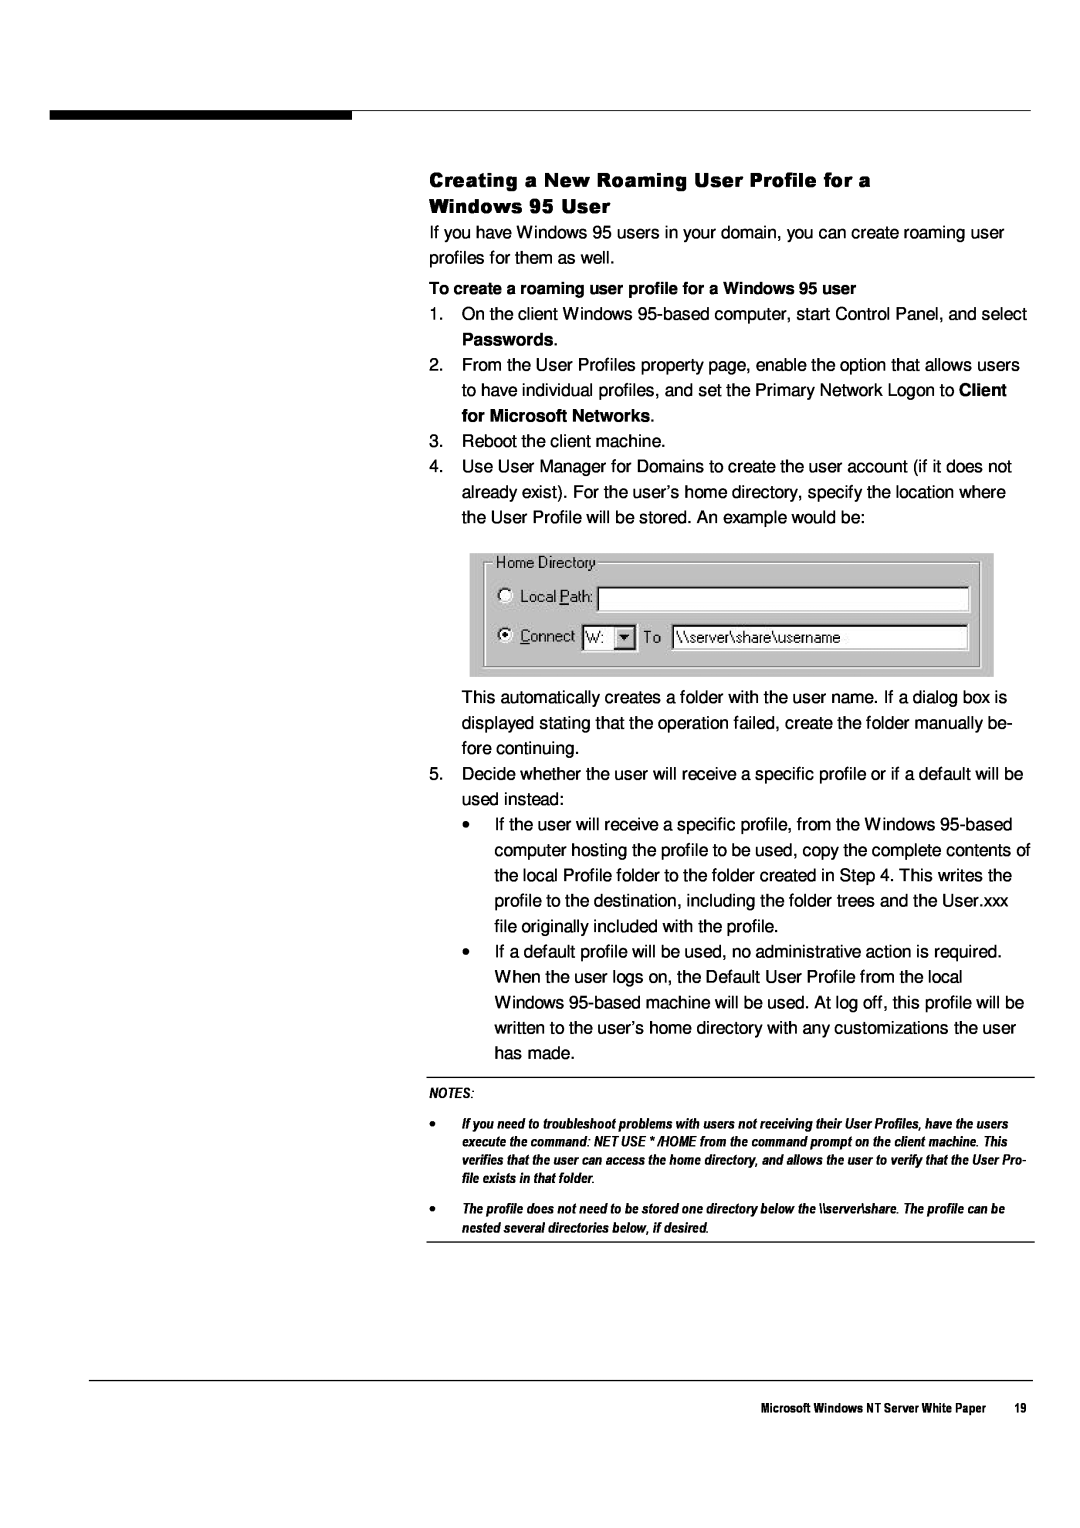 Microsoft Windows NT 4.0 manual Creating a New Roaming User Profile for a Windows 95 User 